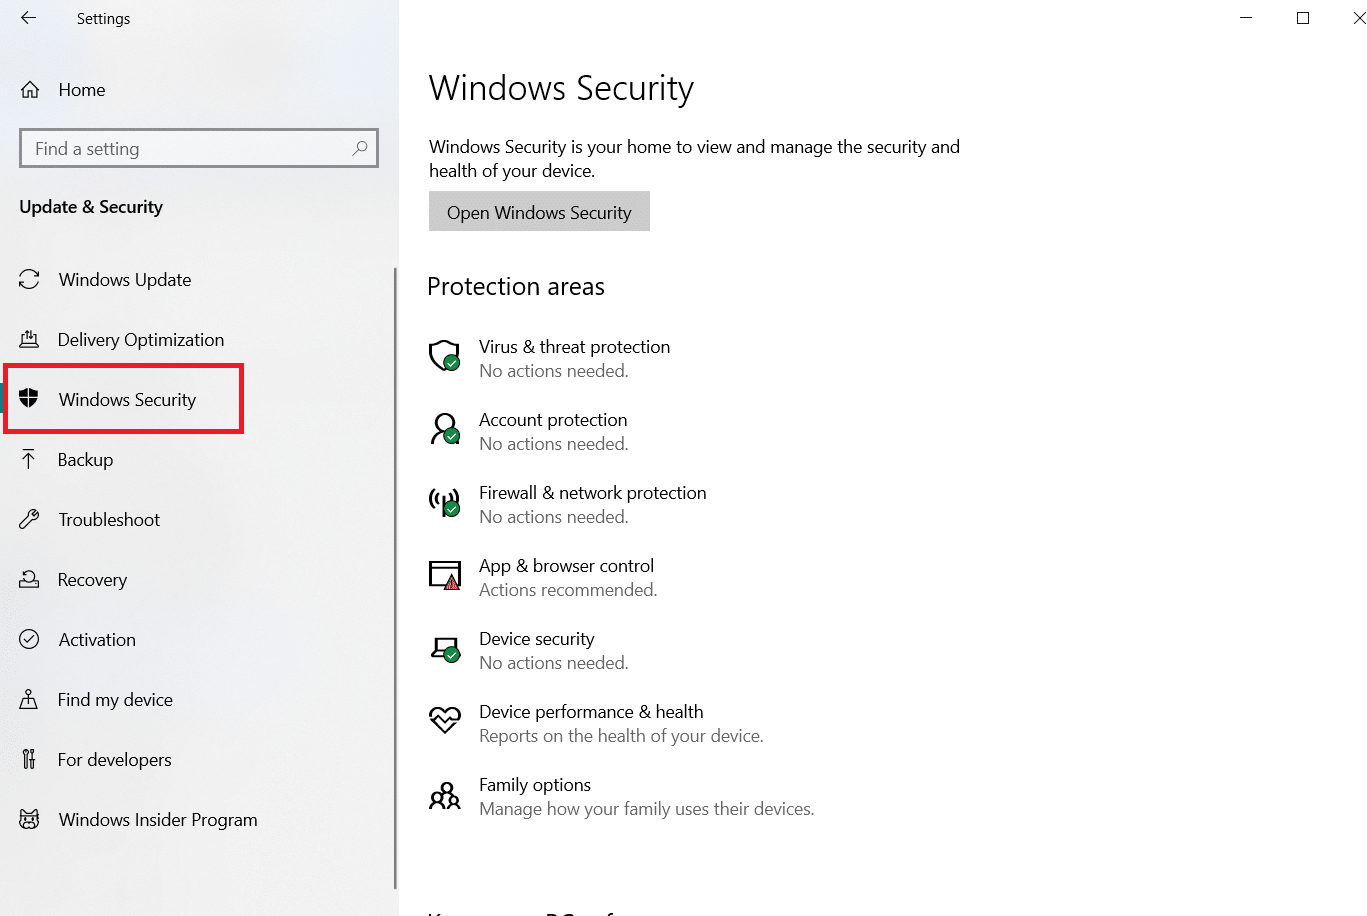 Windows Security option